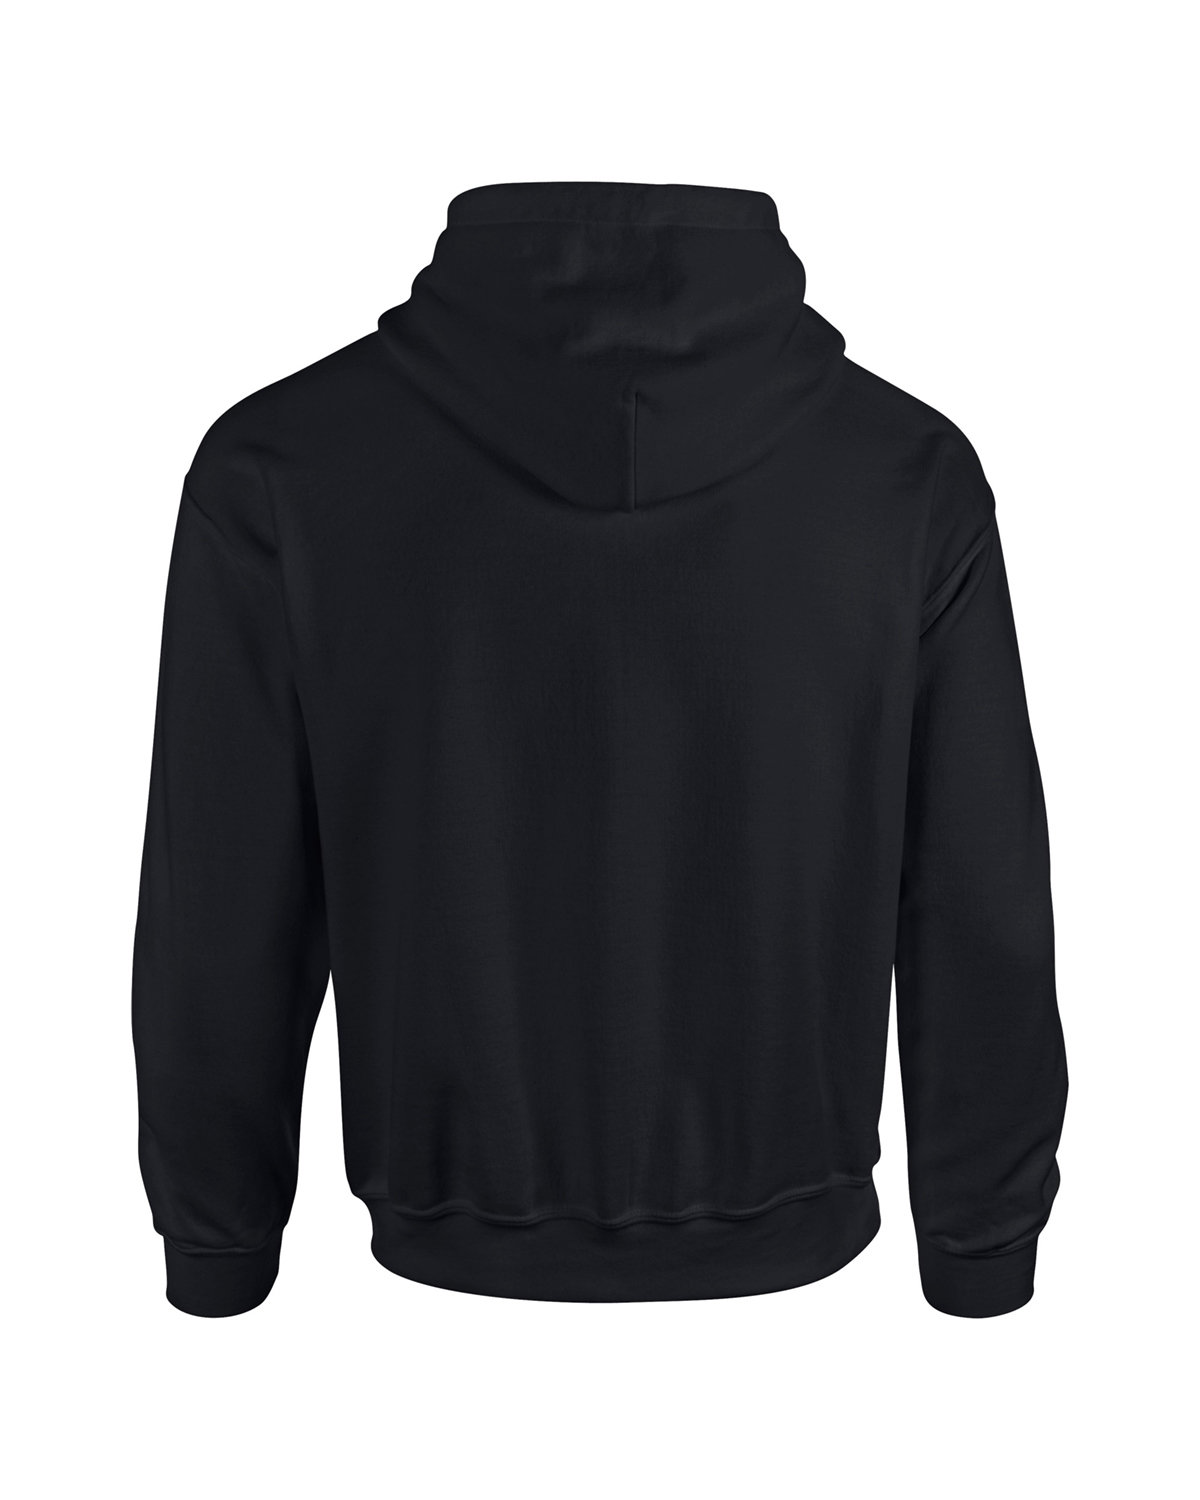 Gildan 1850 Heavy Blend 50/50 Hooded Sweatshirt 